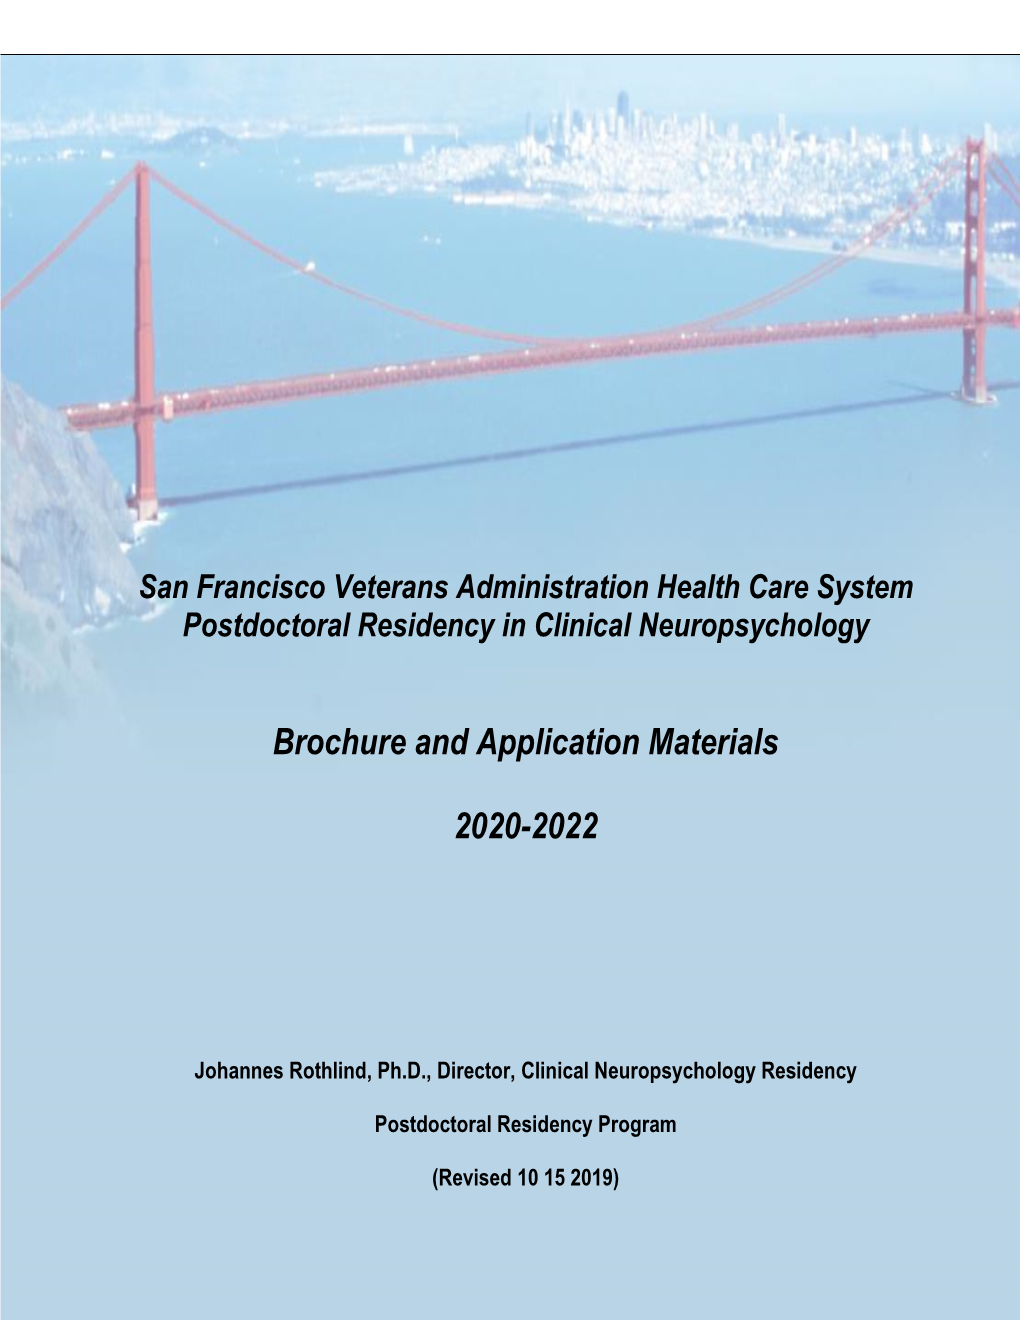 Clinical Neuropsychology Residency Brochure 2020-22